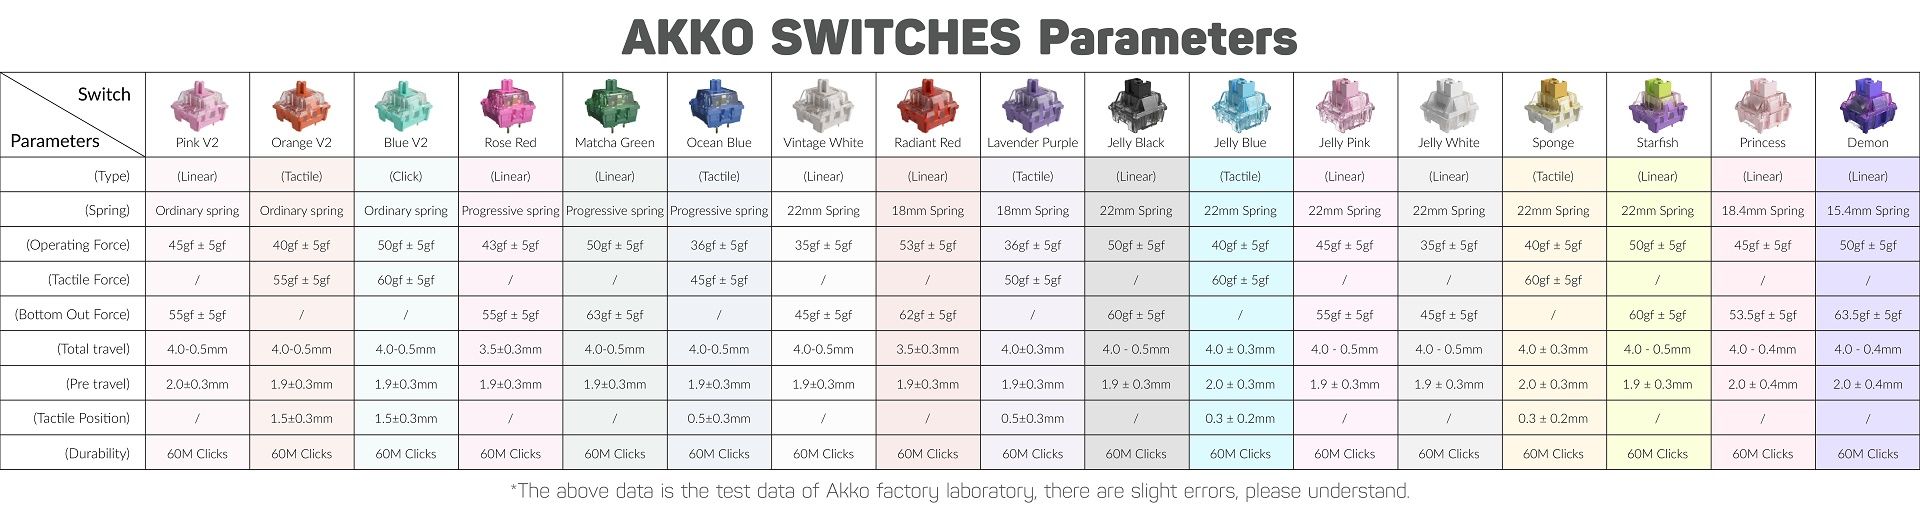 Thông số của AKKO Switch